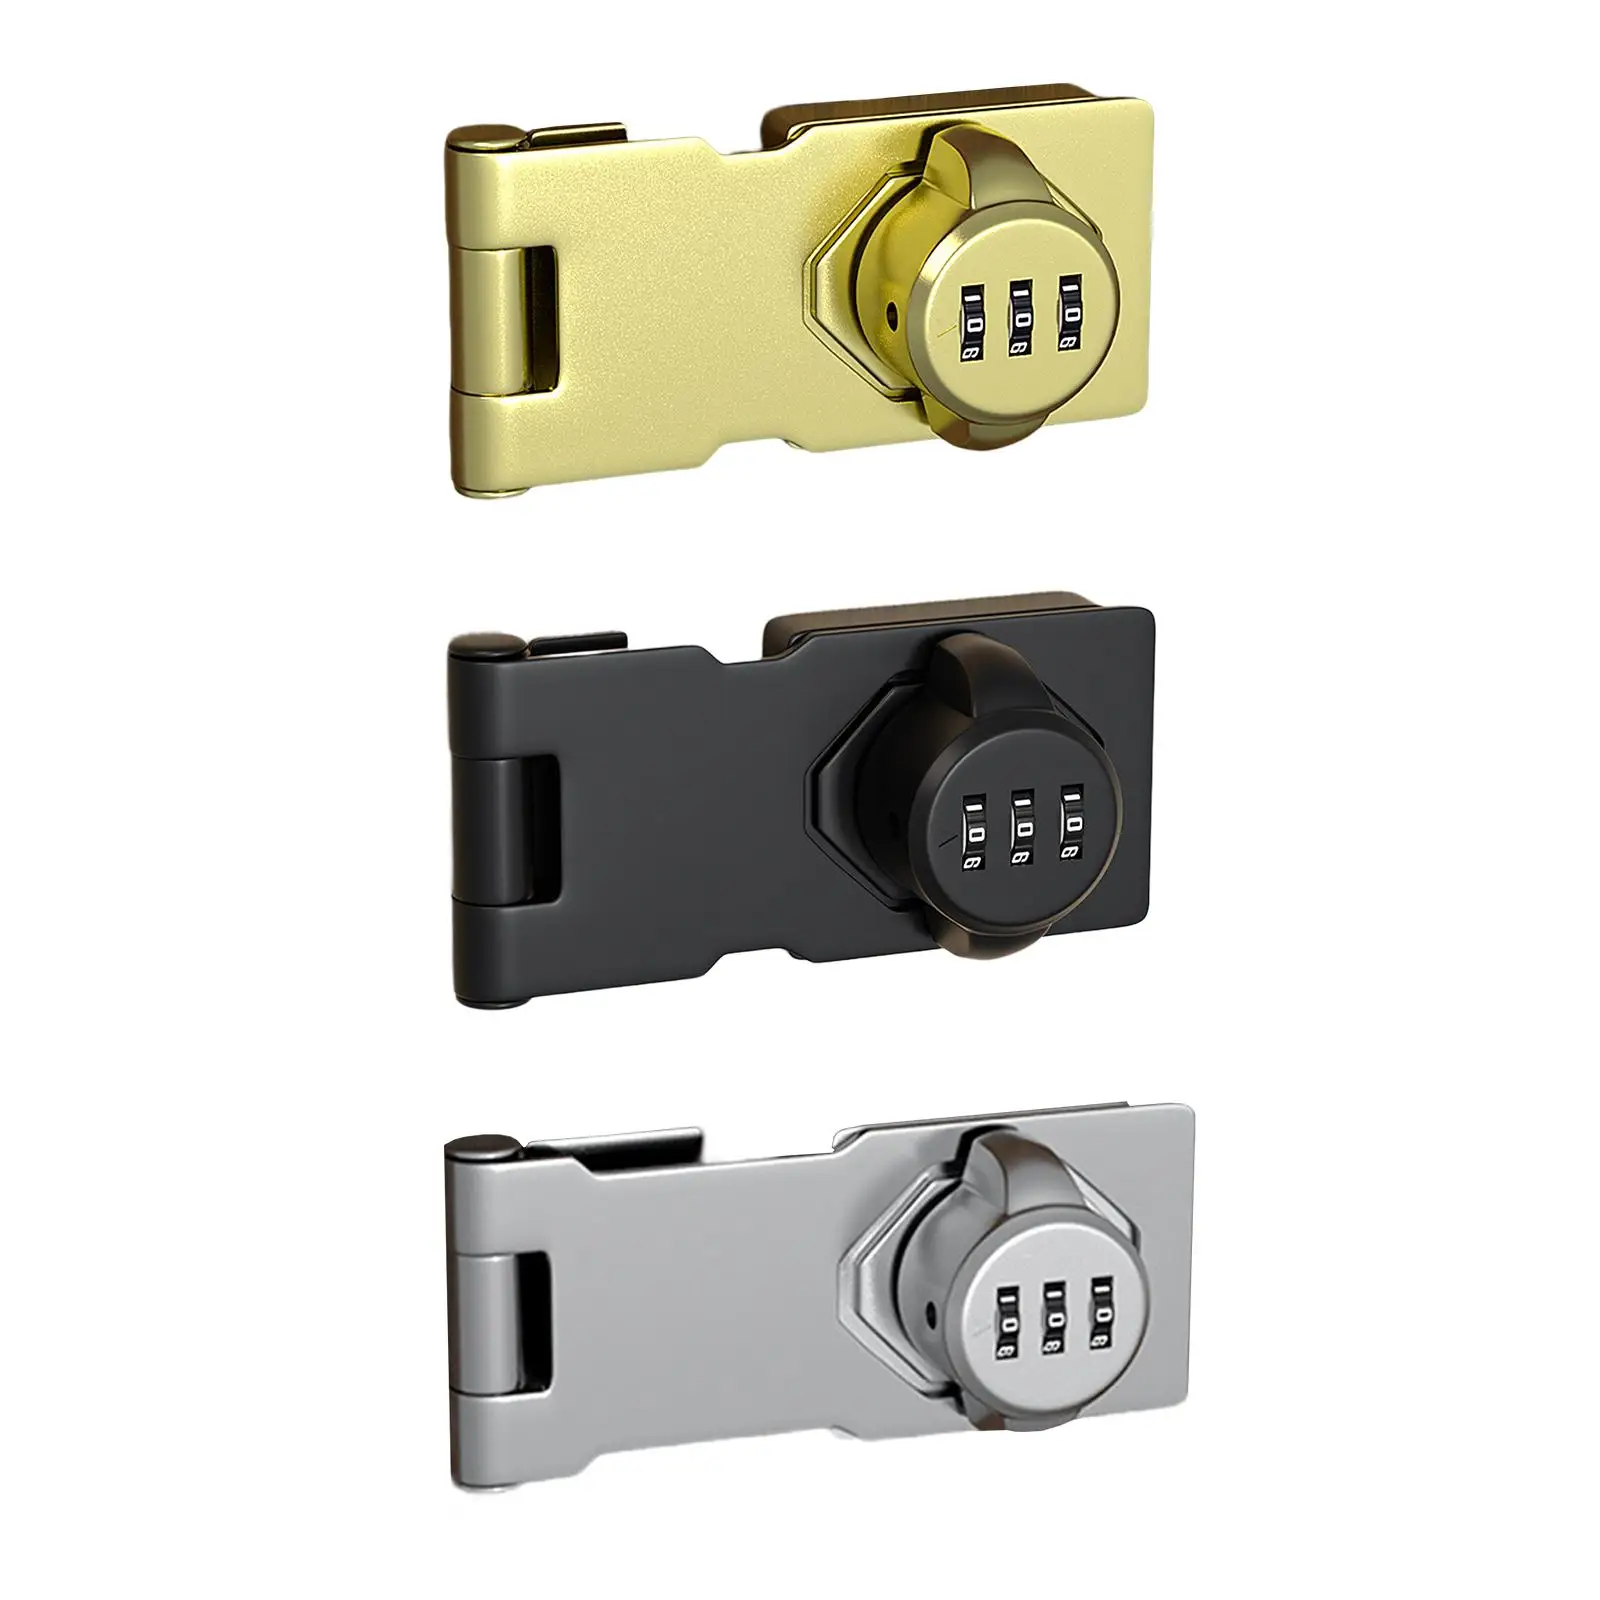 Mechanical Password Lock Keyless with Screws Mechanical Dial Combination cam Lock for Office Garden Cabinets Garage Bathroom